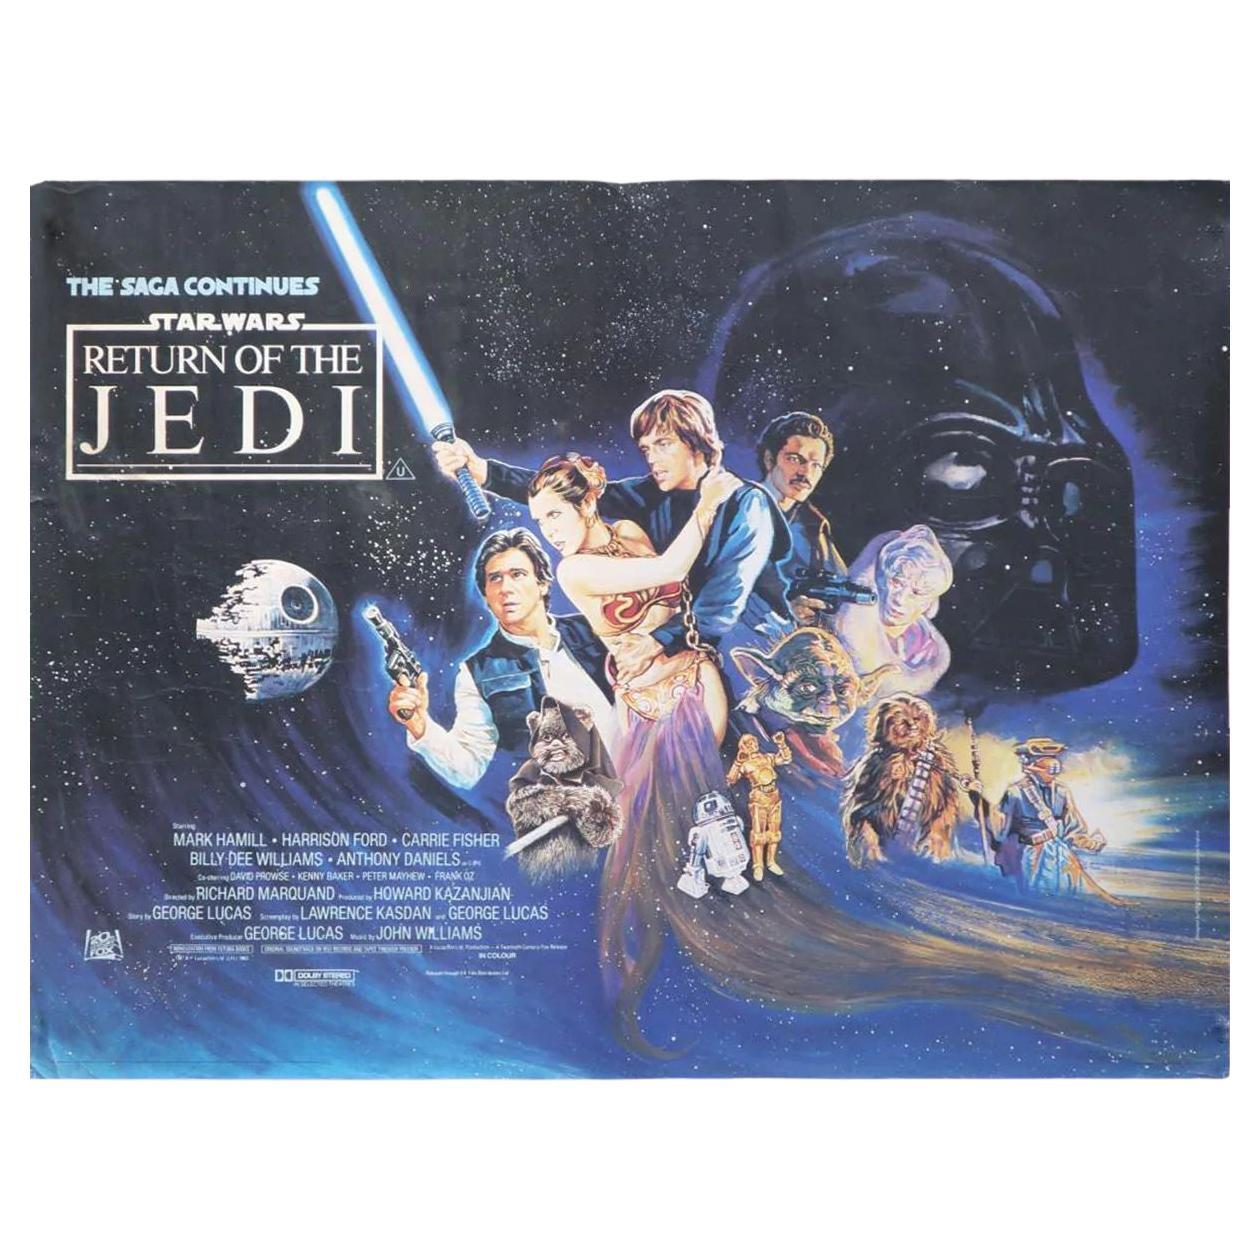 Return of the Jedi, Unframed Poster, 1983 For Sale